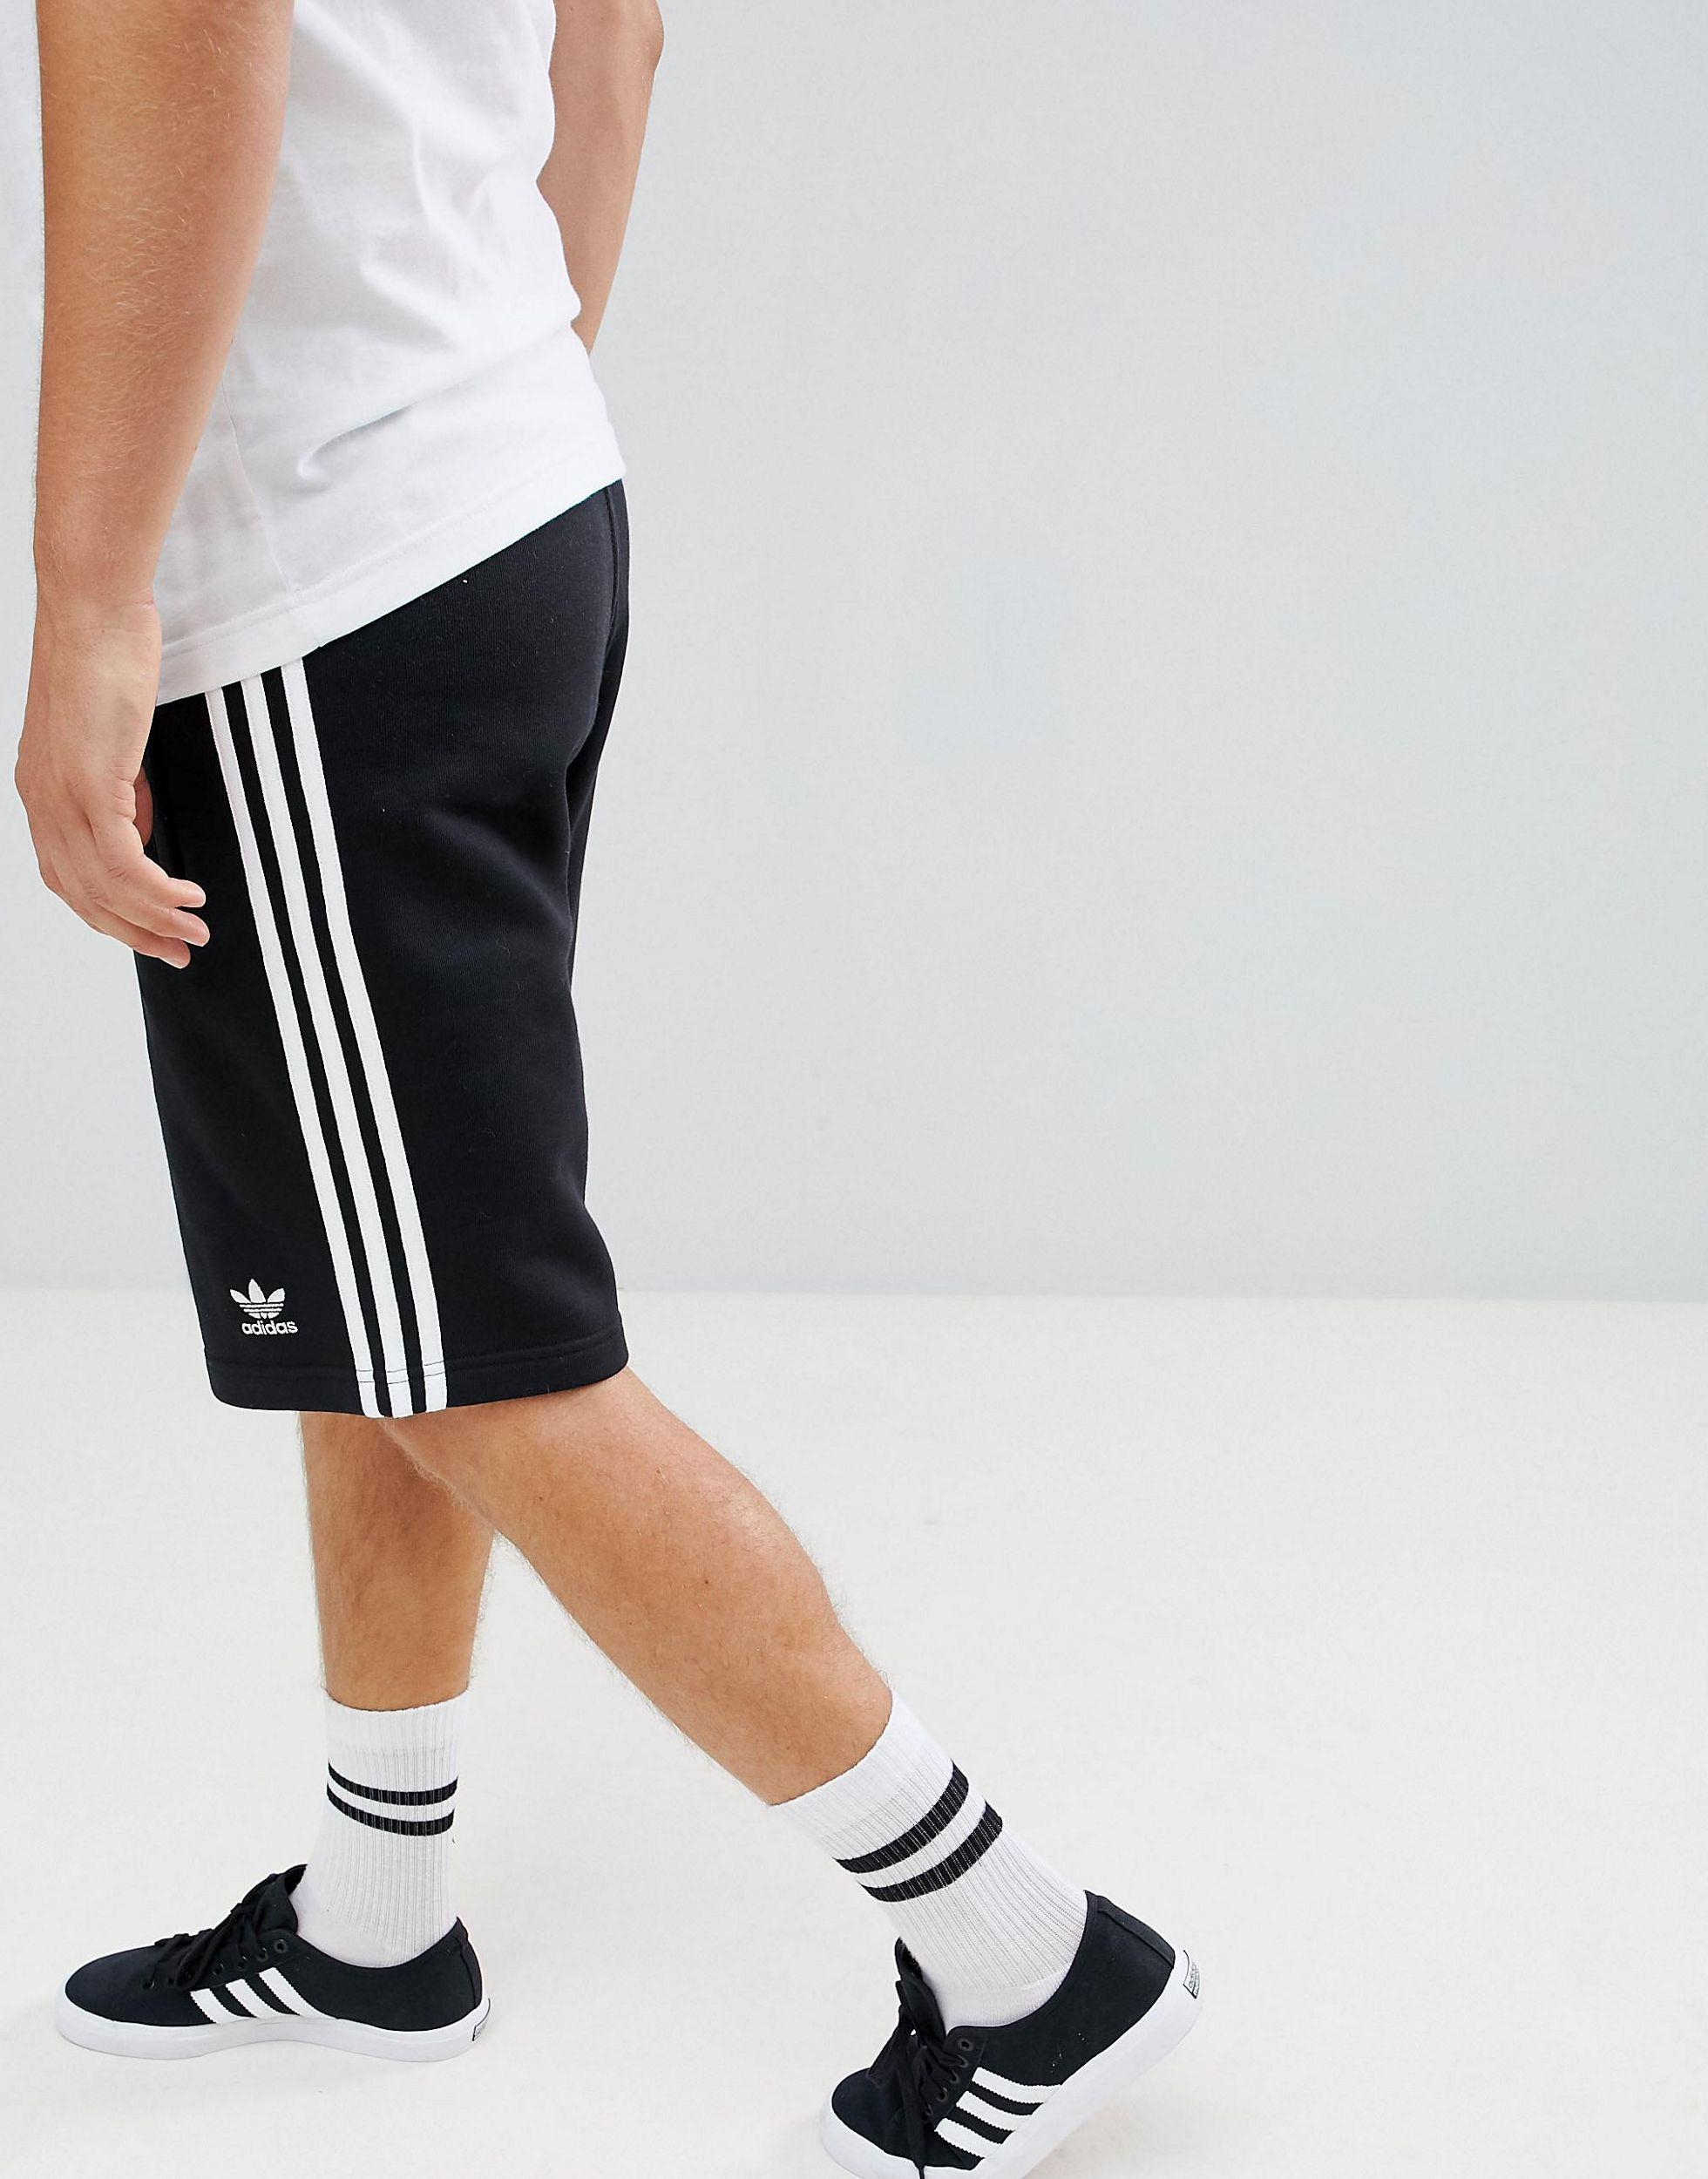 adidas Originals 3-stripe Jersey Shorts in Black for Men - Lyst